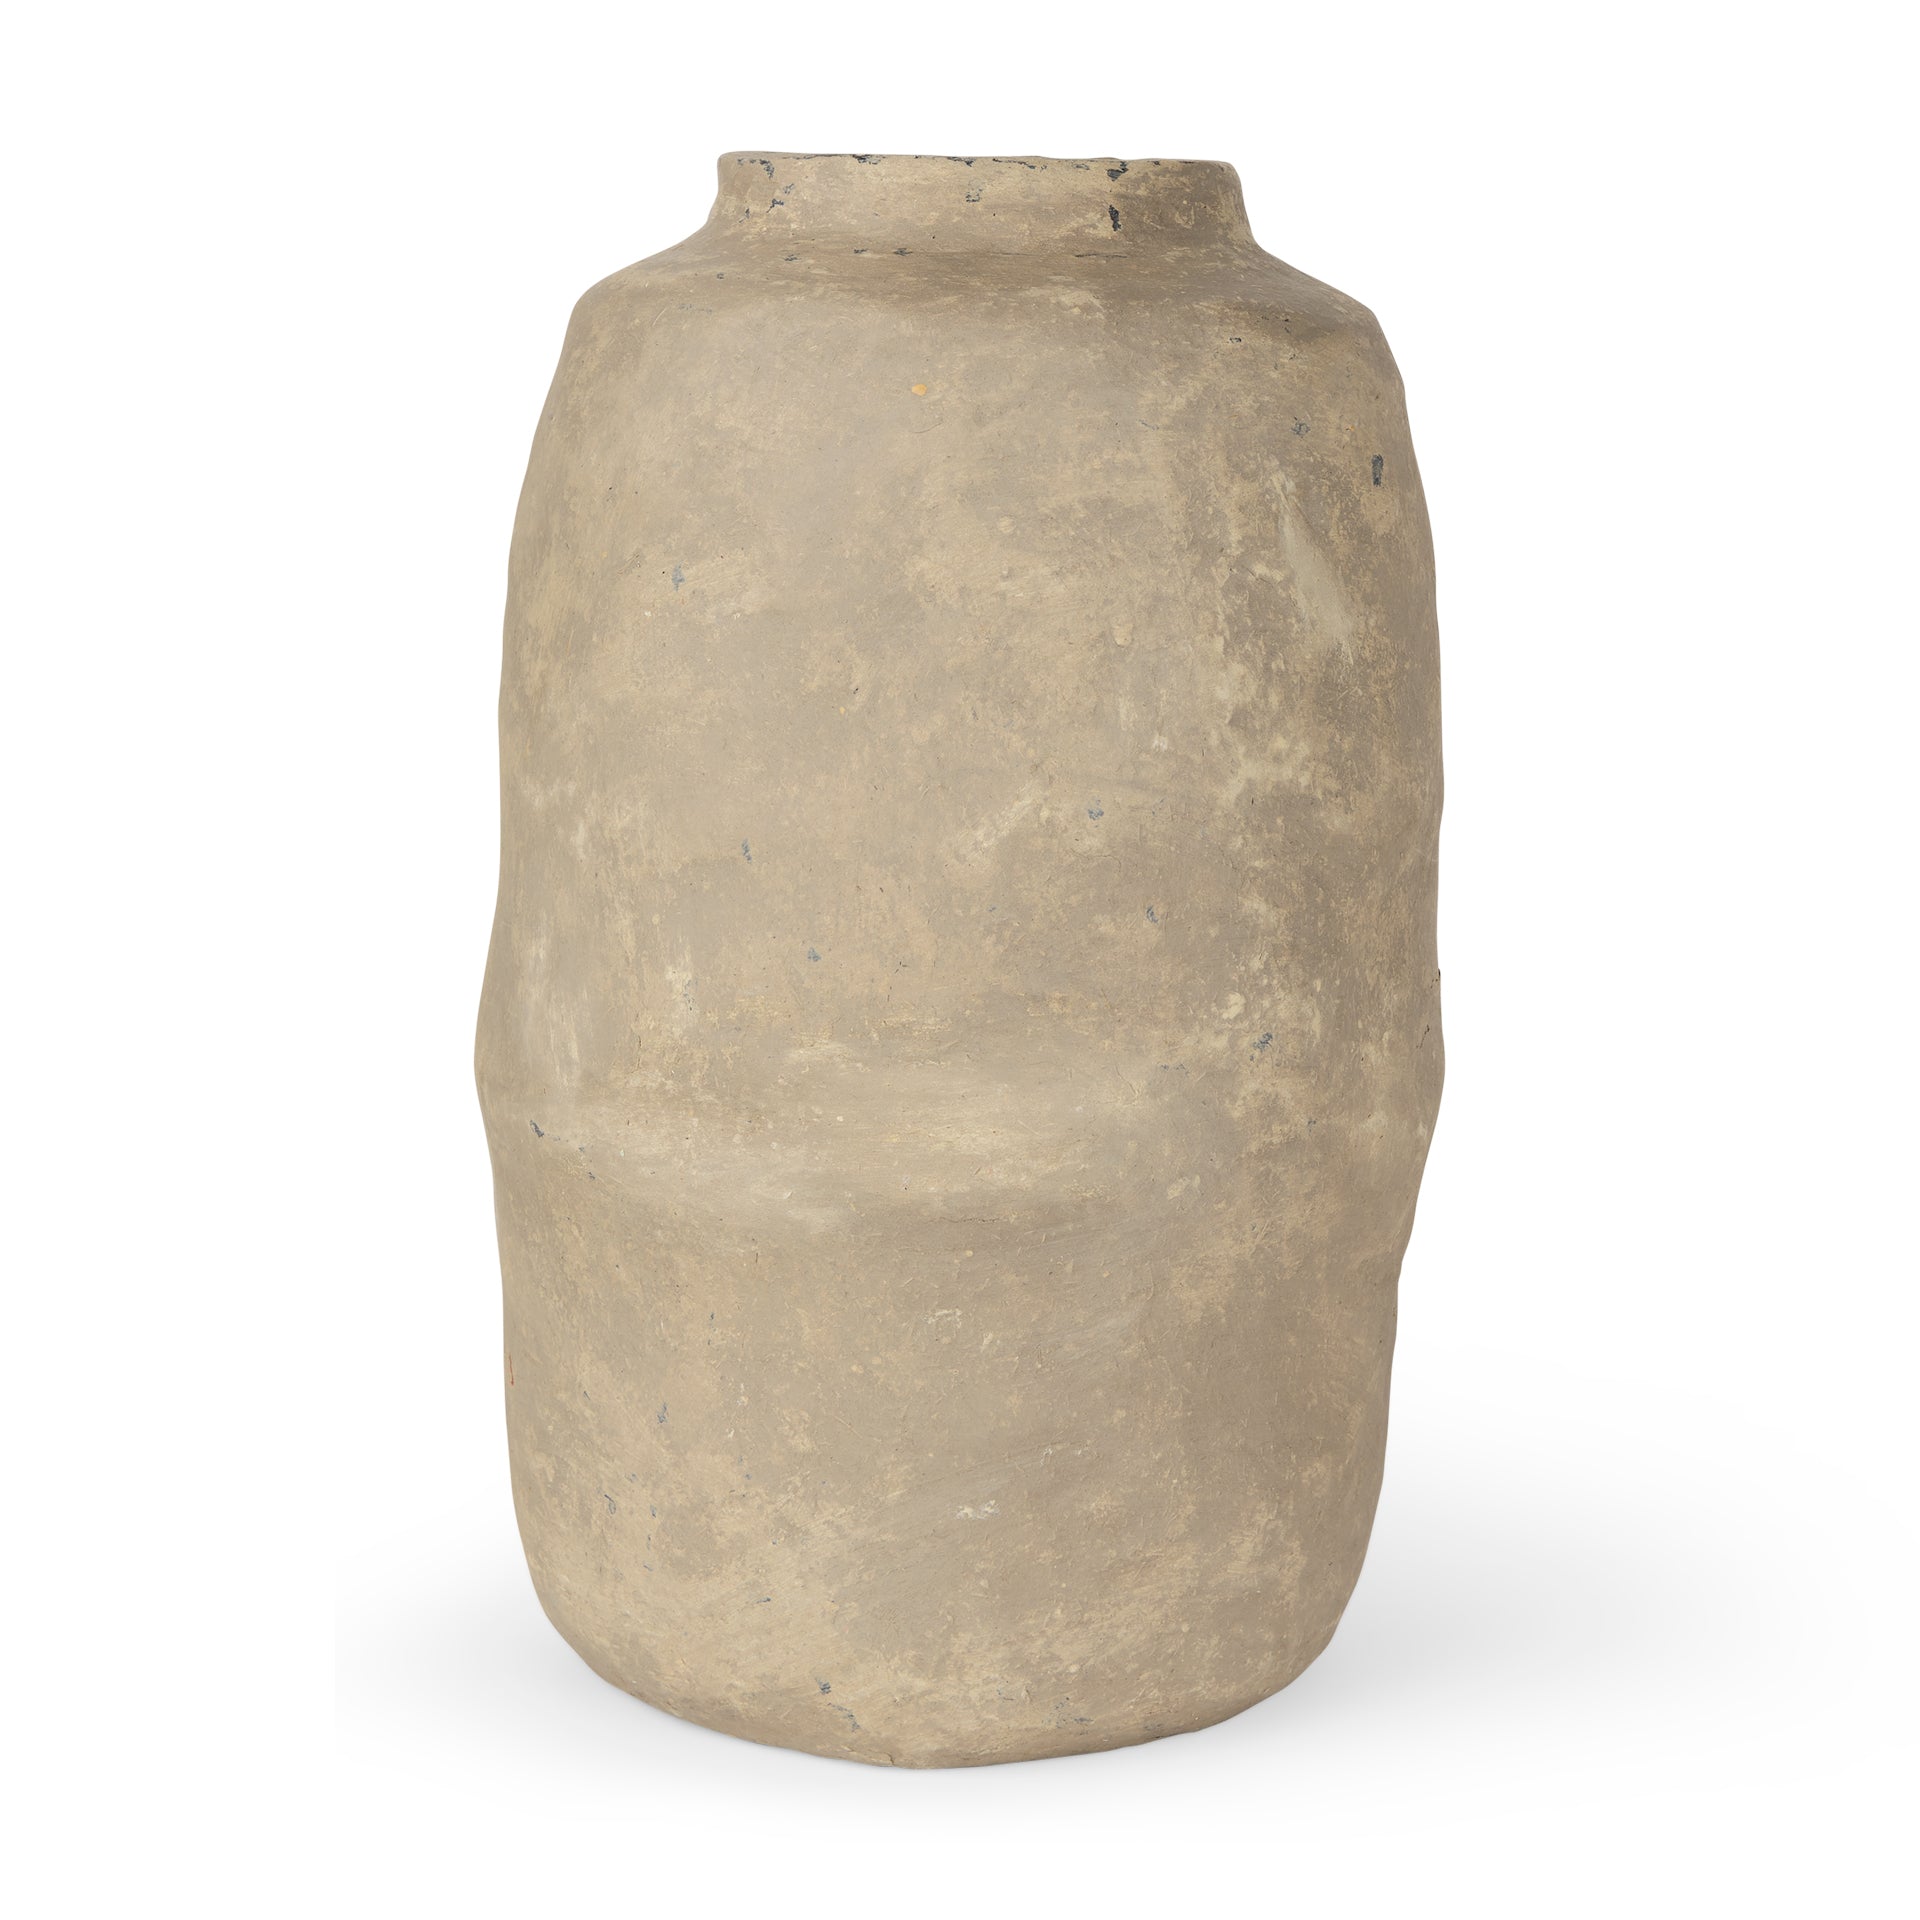 Bala Gray Paper Mache Vase 18"